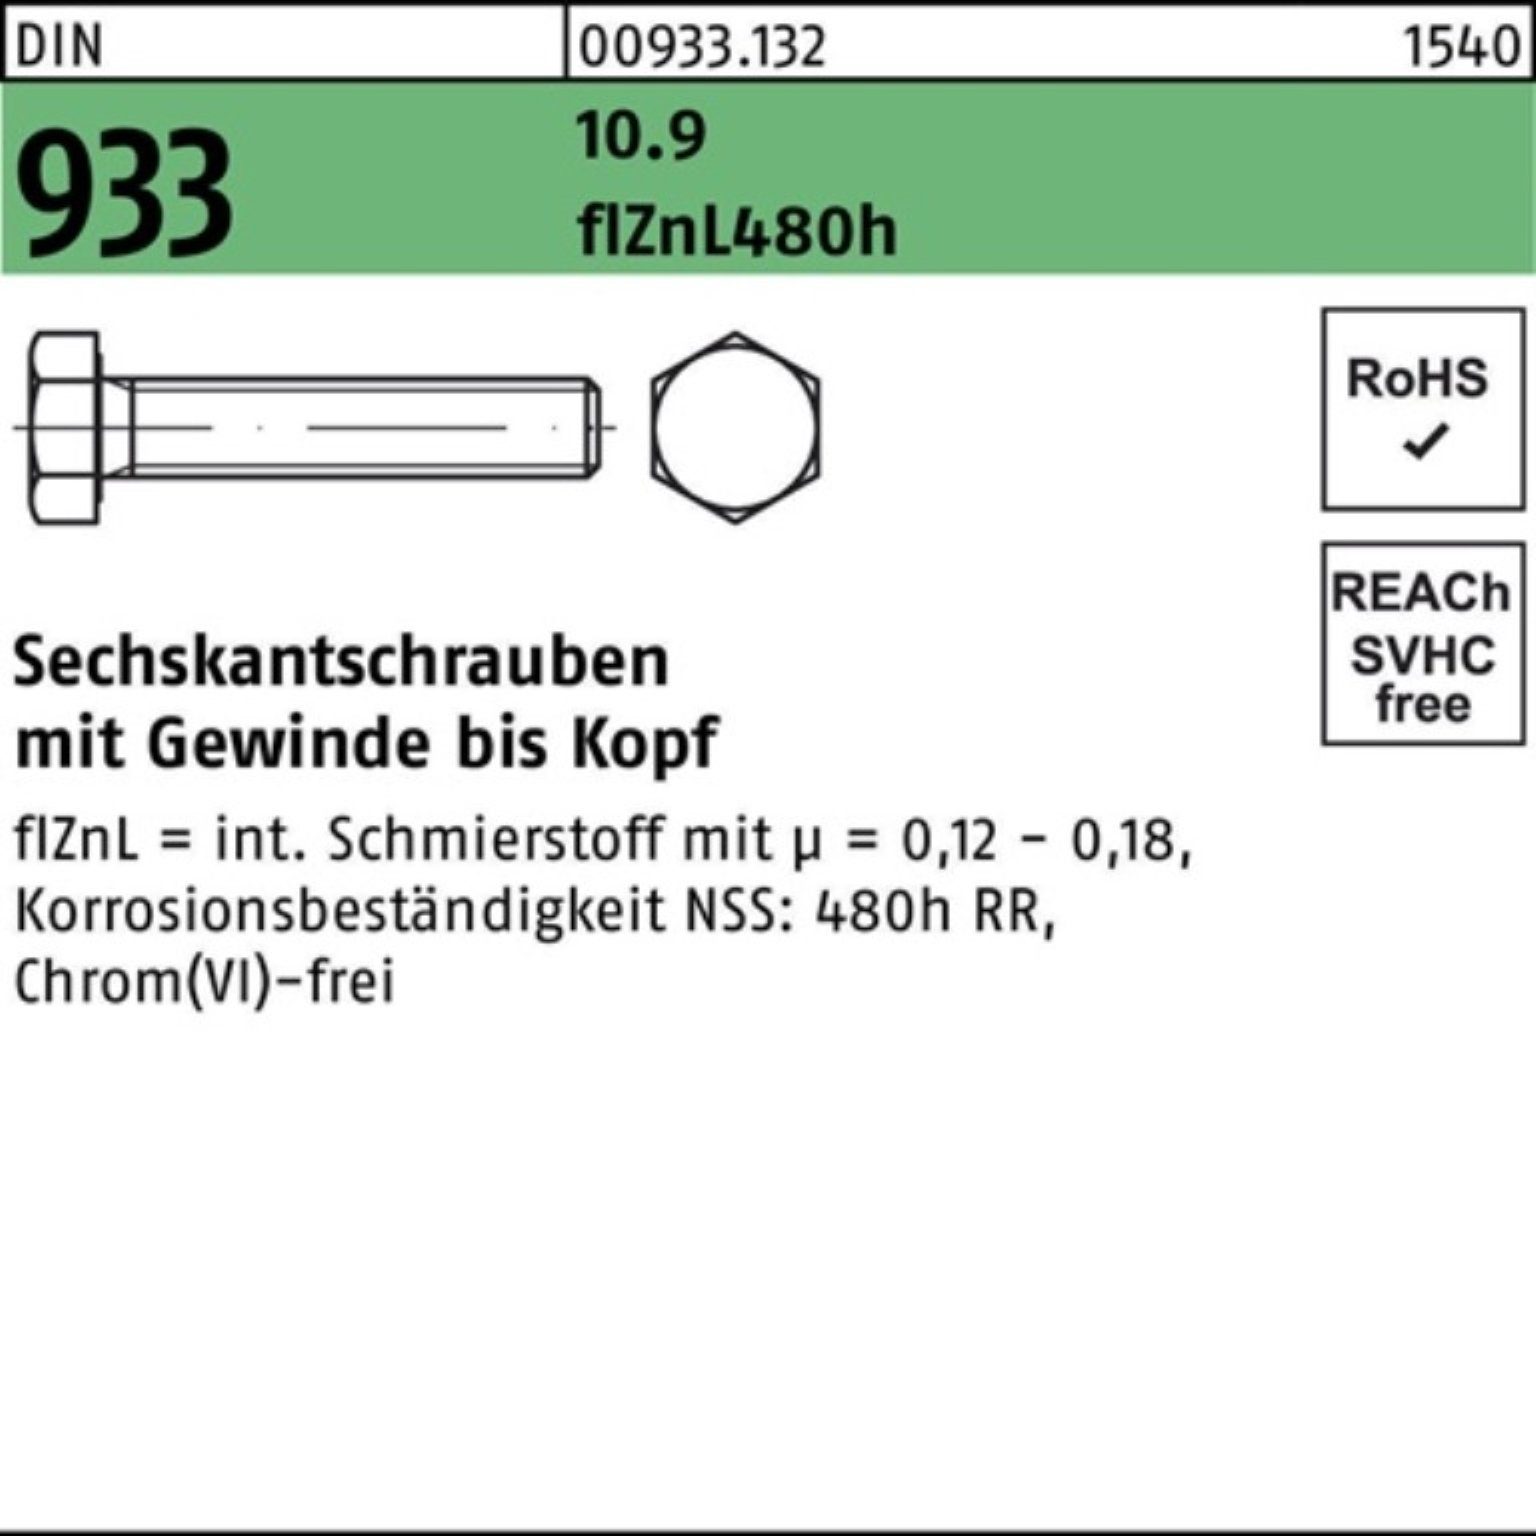 Reyher Sechskantschraube 100er Pack Sechskantschraube DIN 933 VG M20x 55 10.9 flZnL/nc/x/x/480h